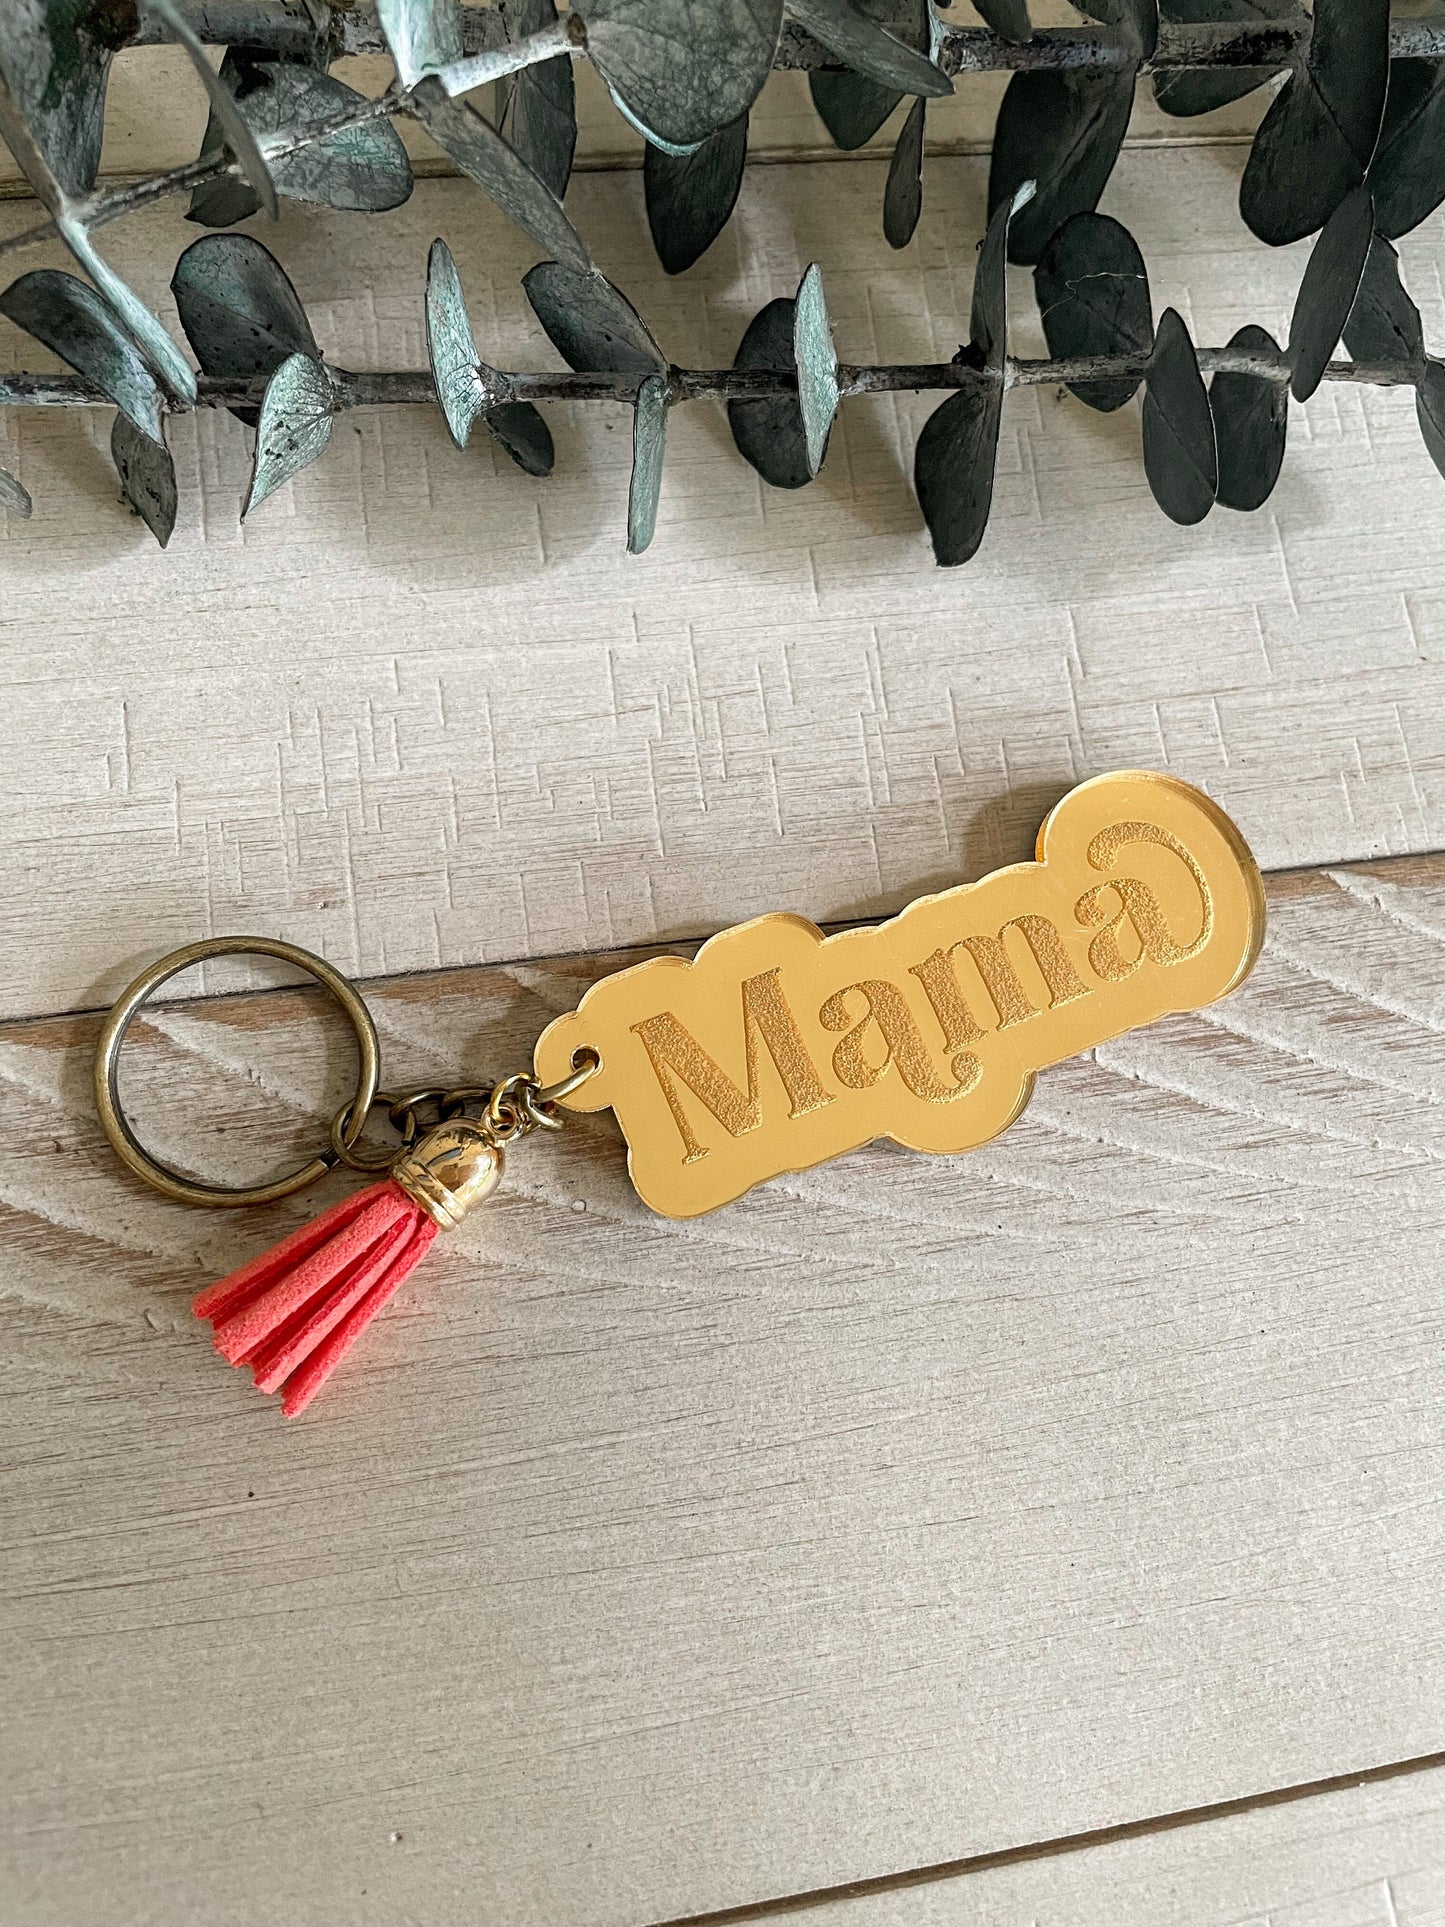 Mama  Acrylic Keychain